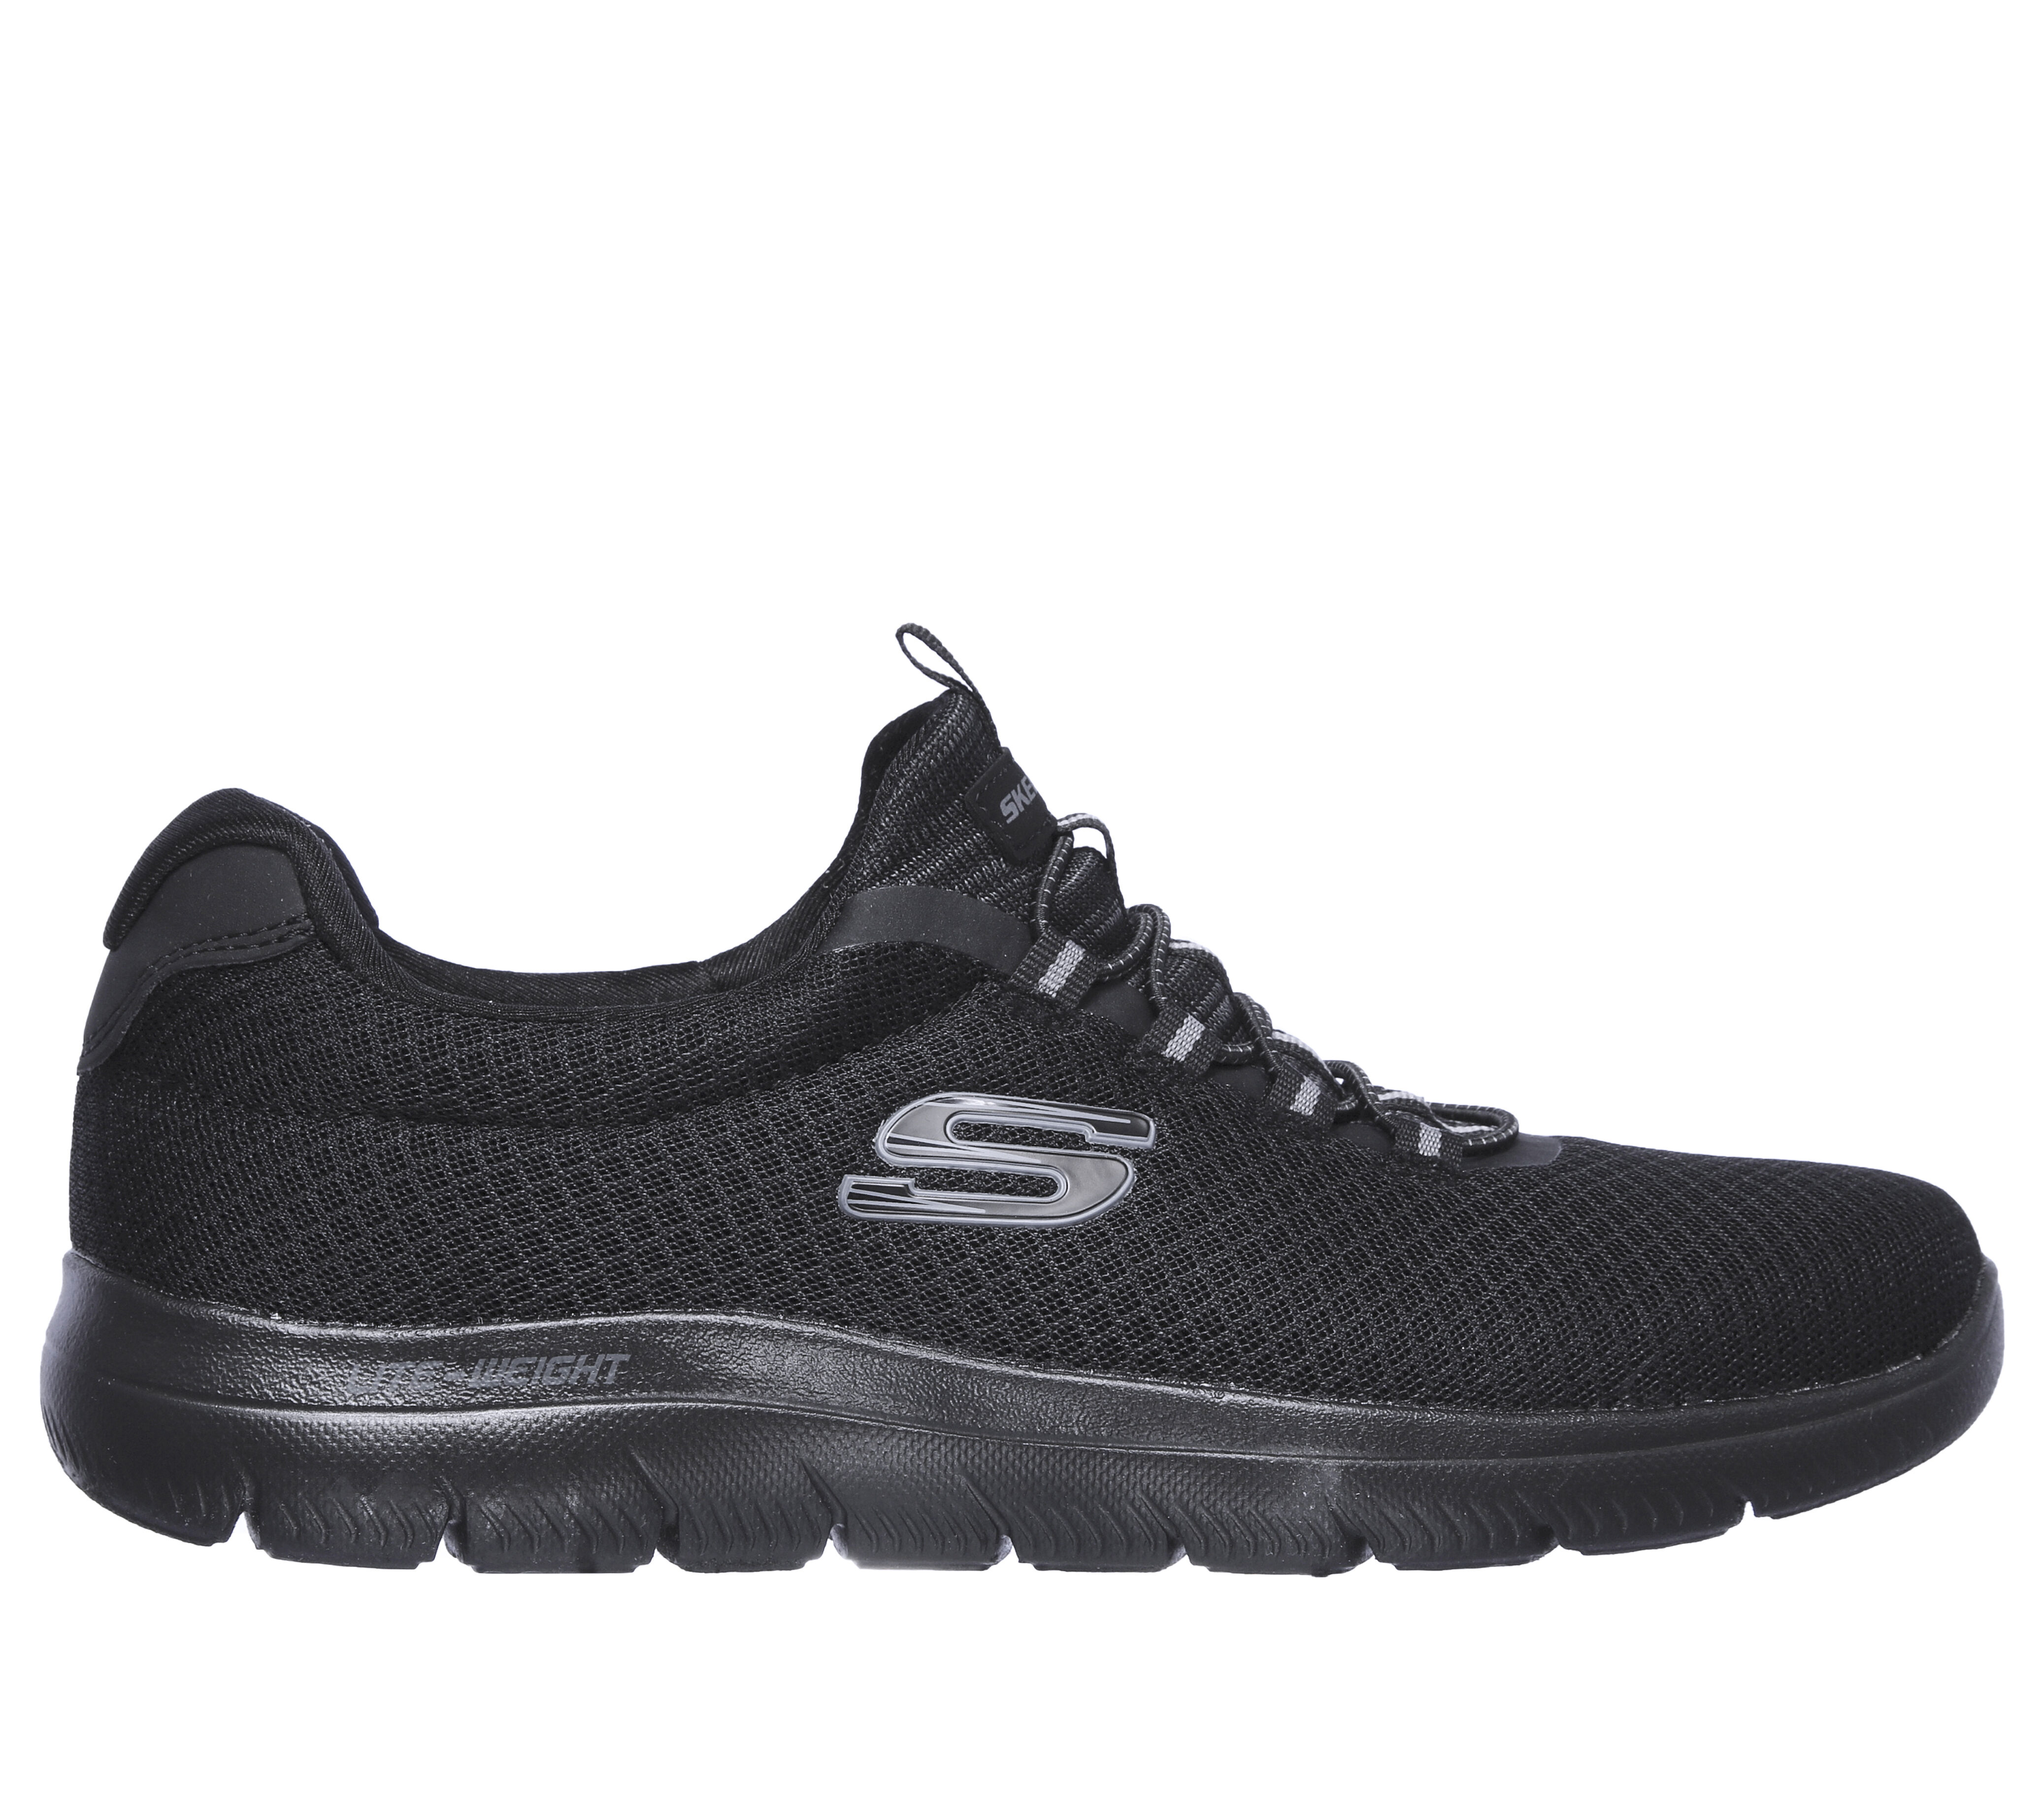 skechers black trainers size 5